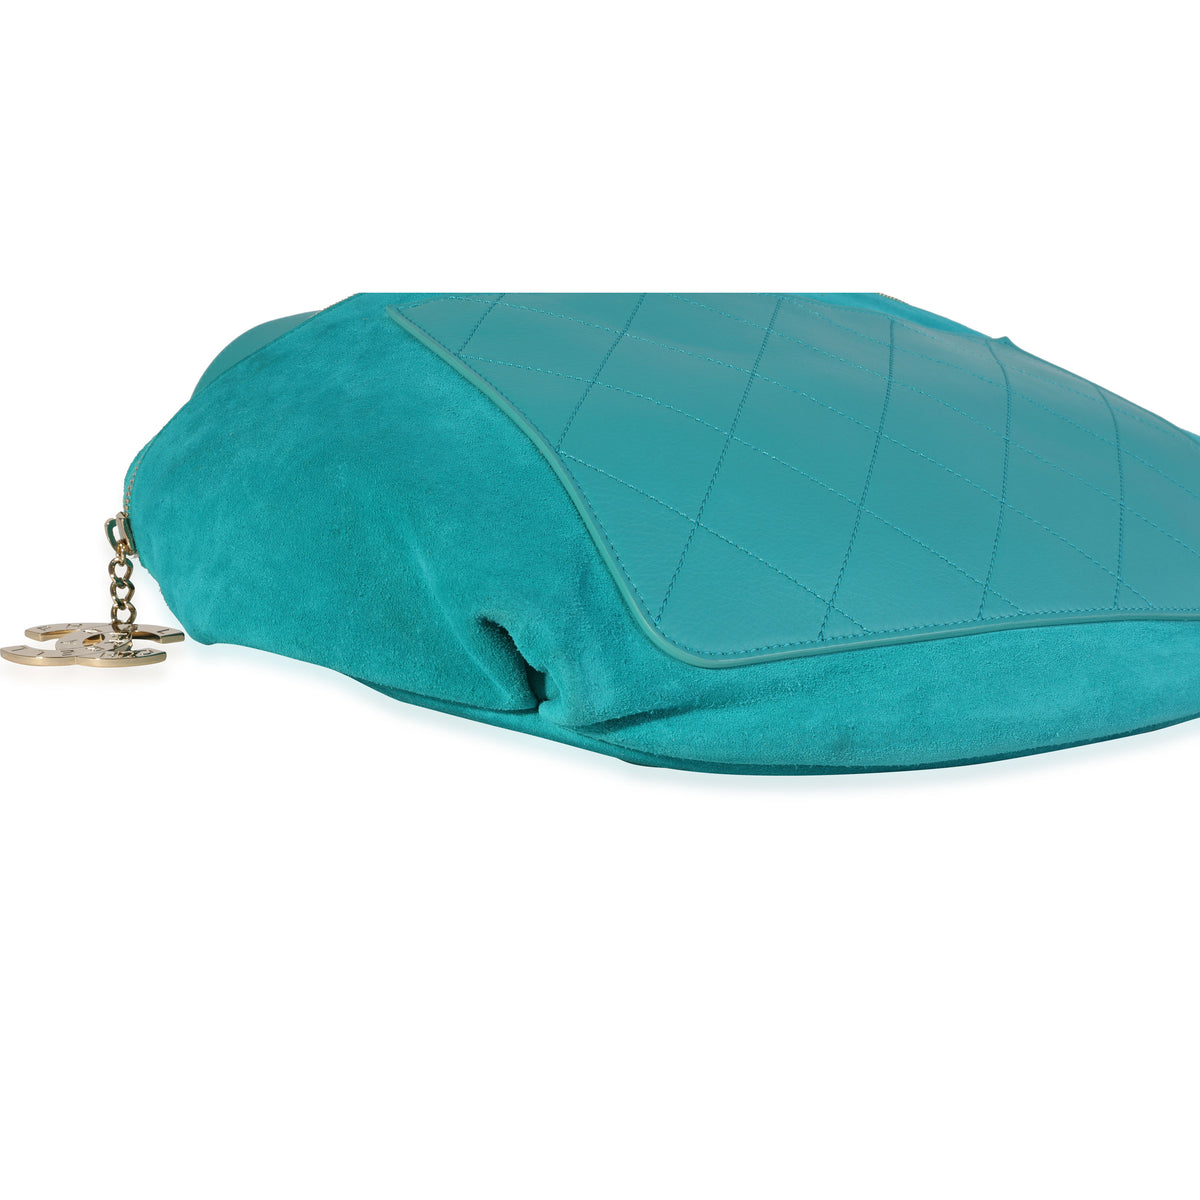 Chanel x Pharrell Williams Teal Suede & Quilted Calfskin Oversize Waist Bag